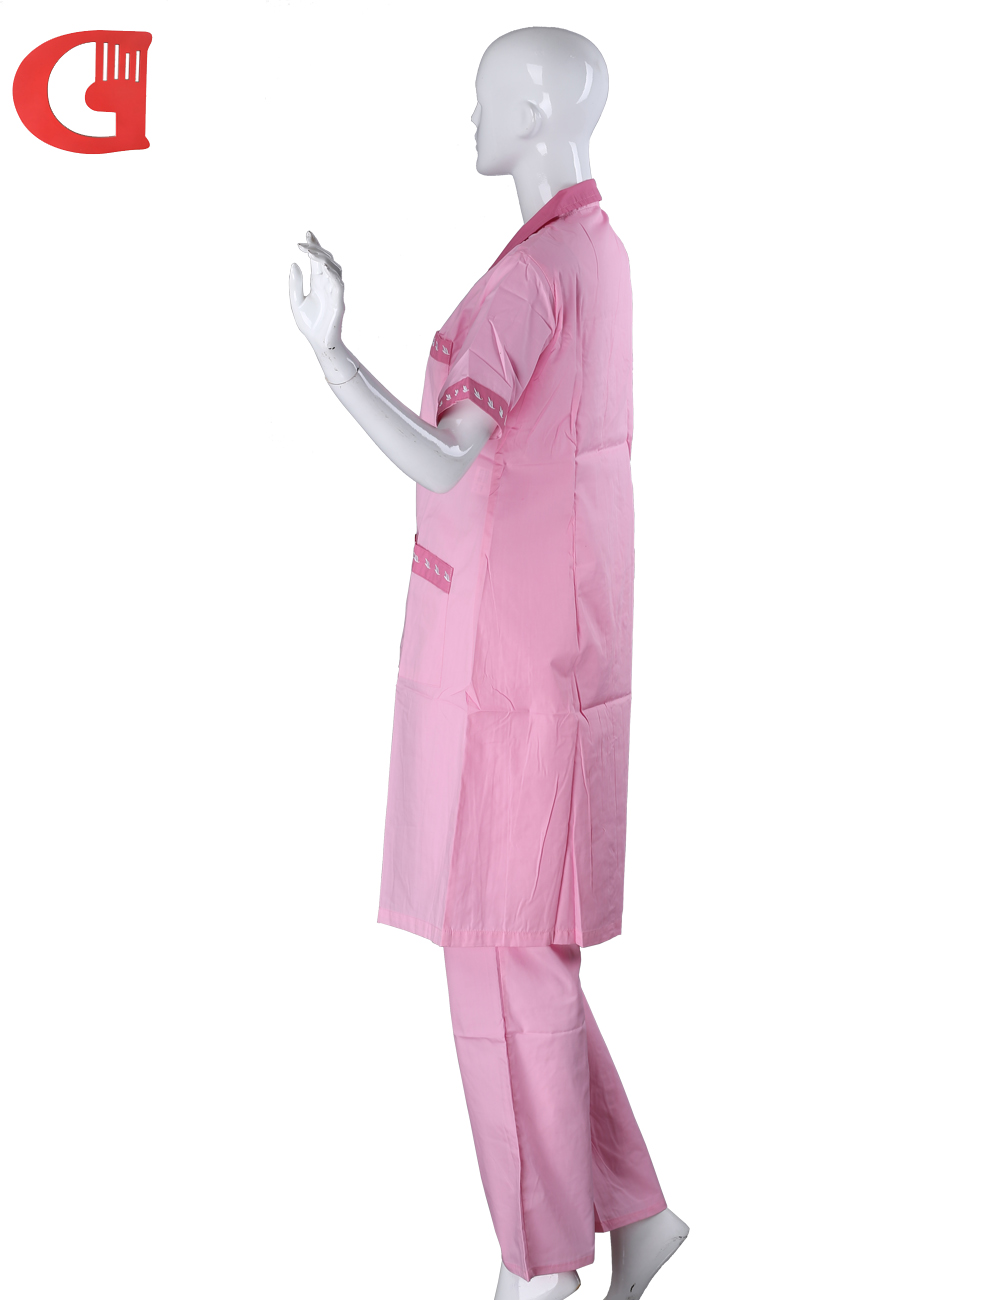 100%Cotton Warm Color Nurse Uniform Fashion Medical Scrubs